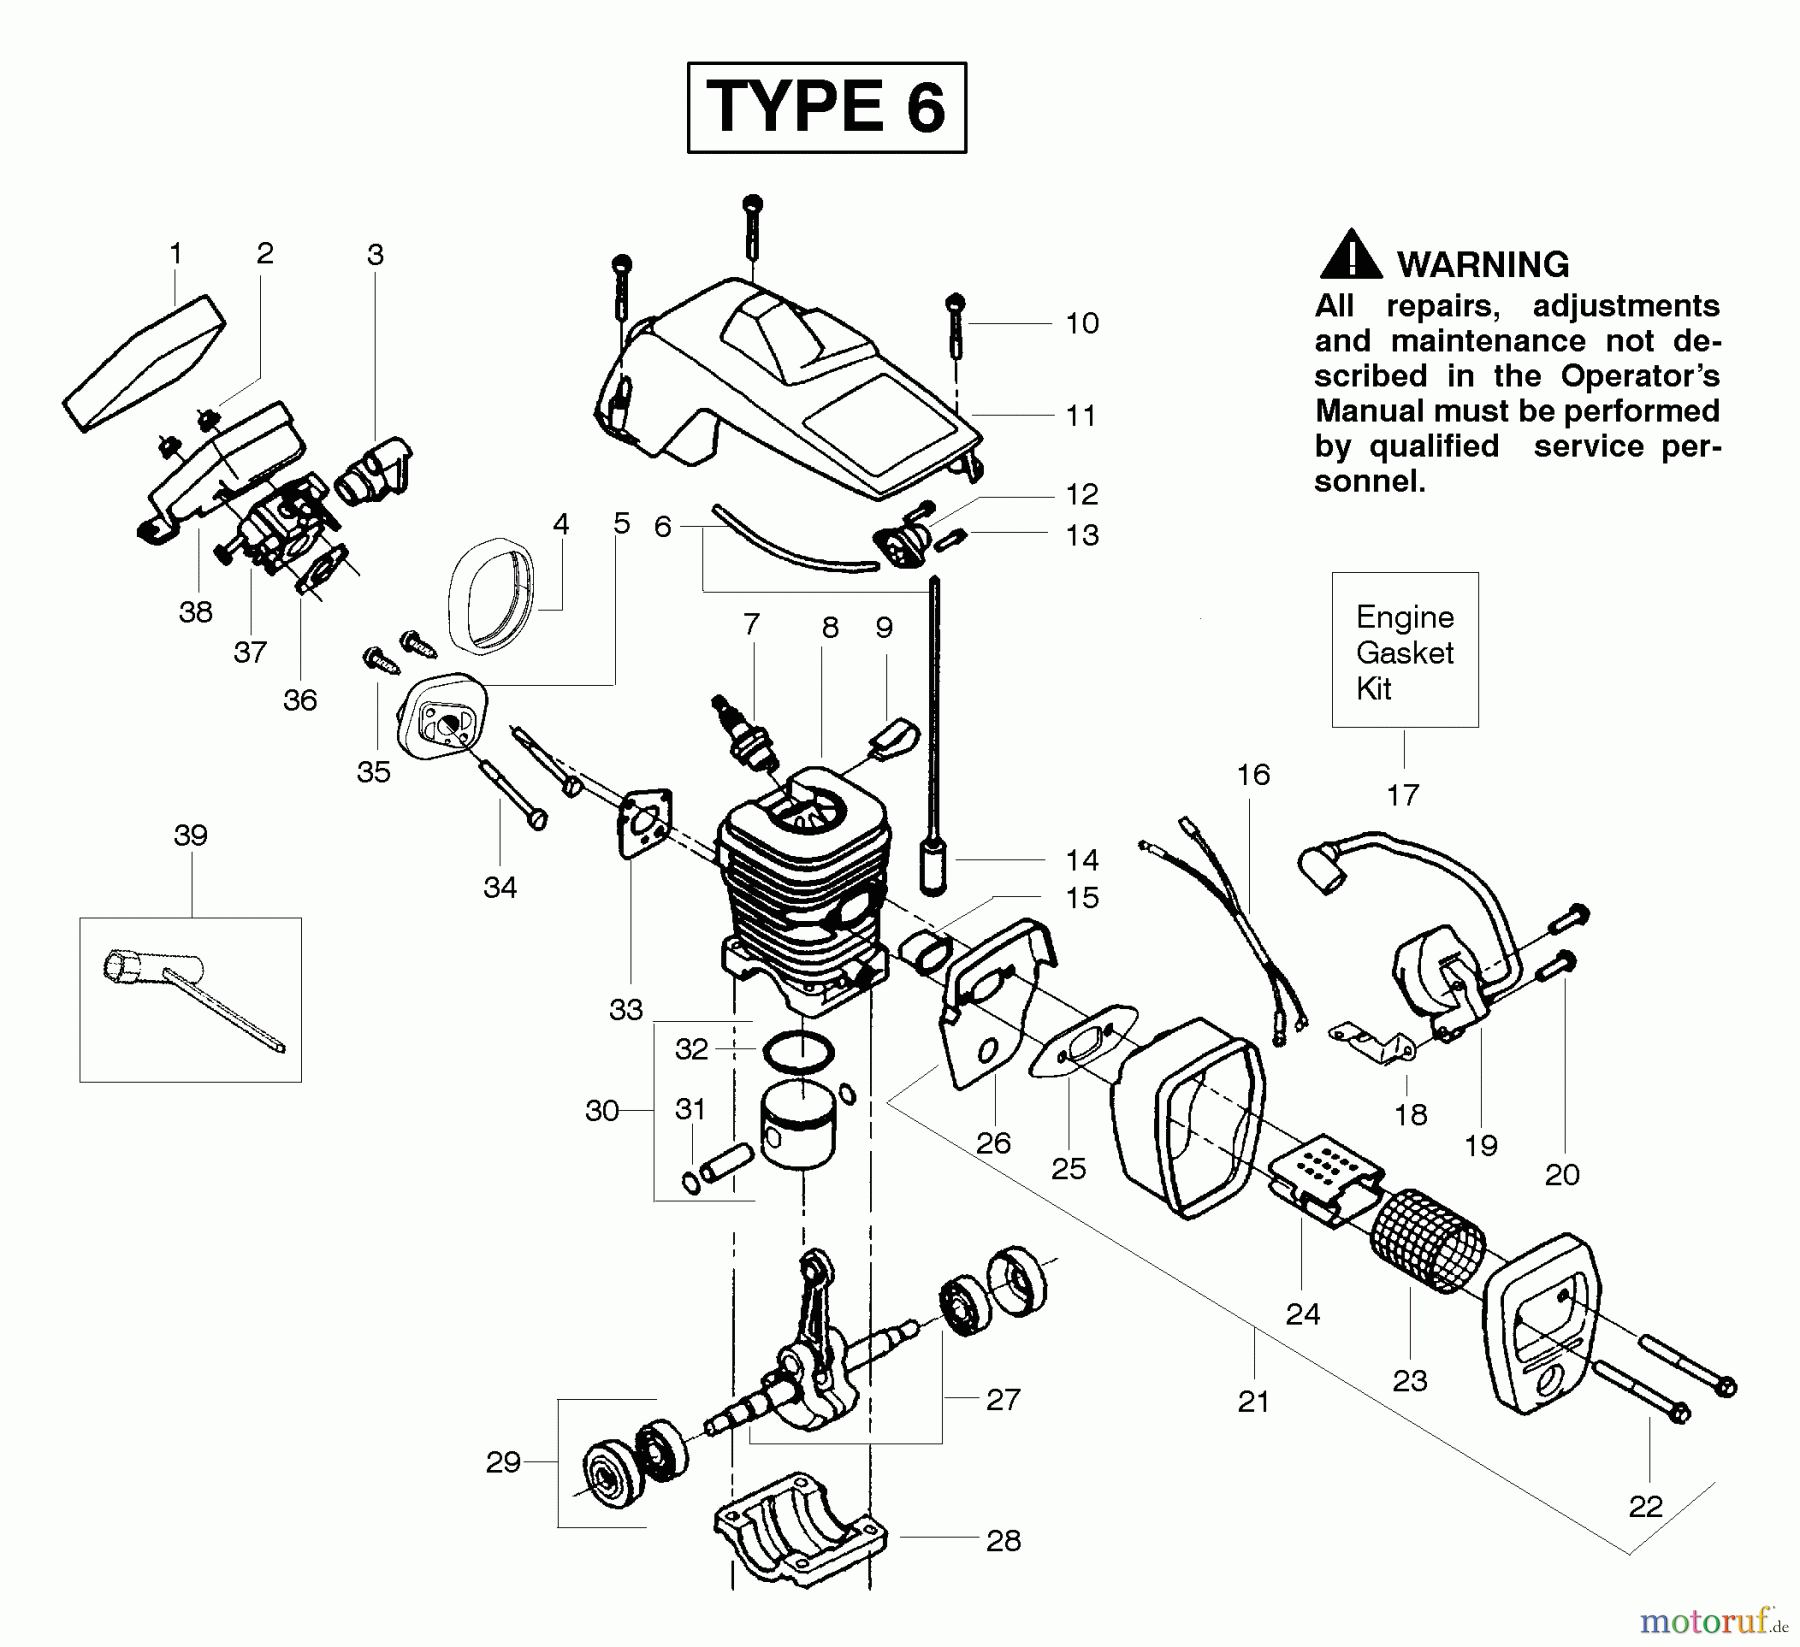  Poulan / Weed Eater Motorsägen 2150 (Type 6) - Poulan Predator Chainsaw Engine Assembly